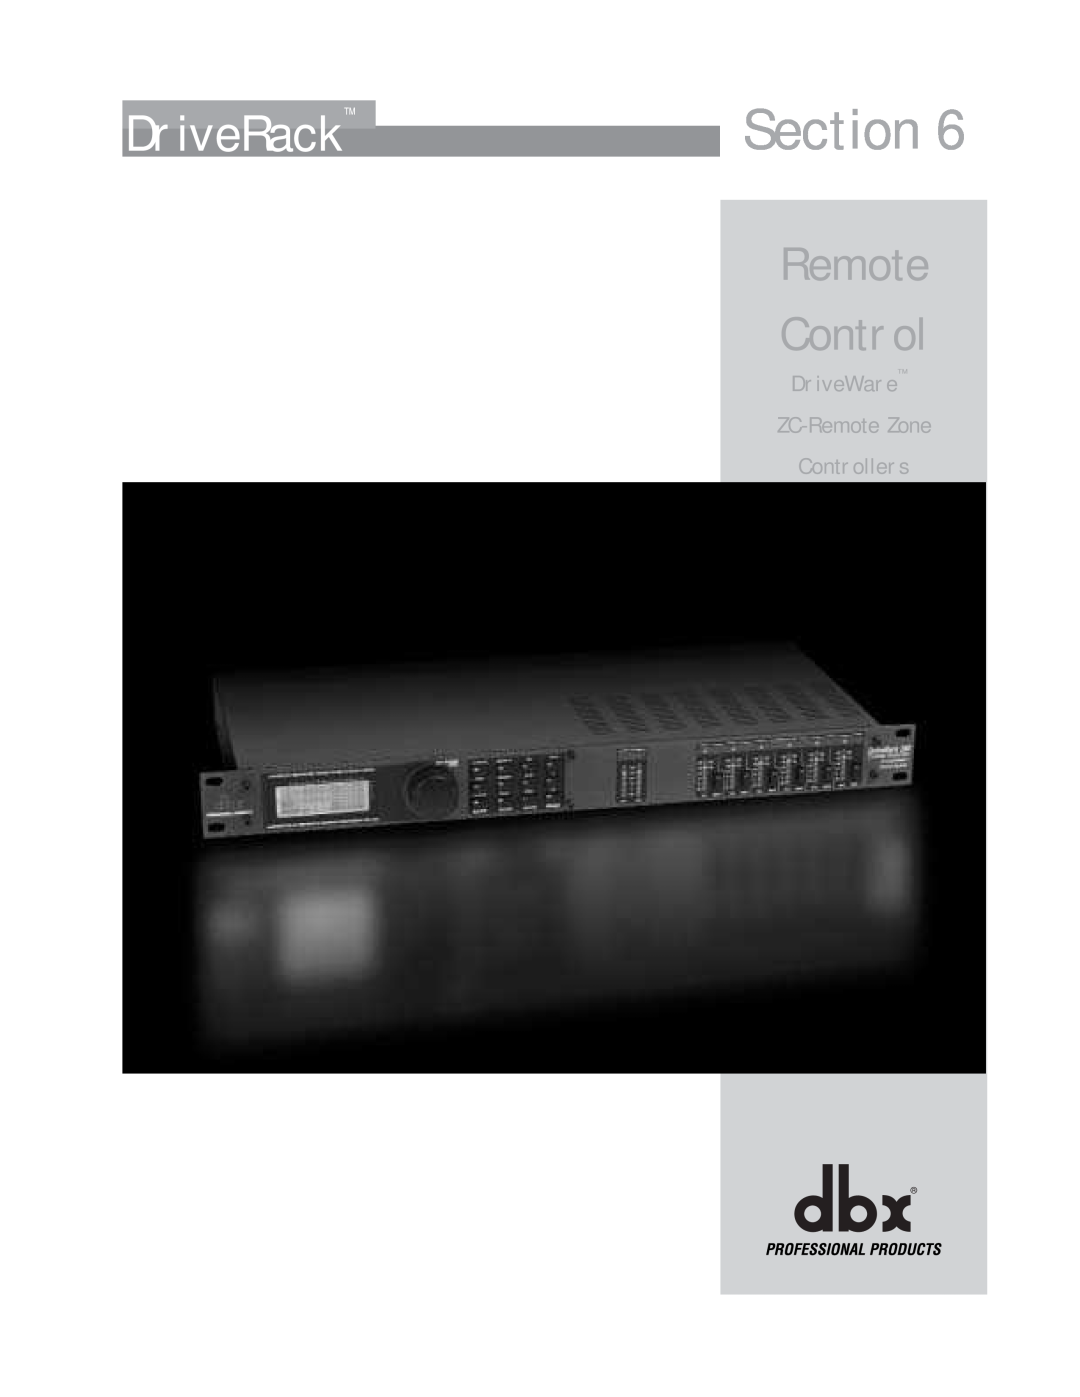 dbx Pro 260 user manual Remote Control, DriveWare ZC-RemoteZone Controllers, DriveRack, Section 